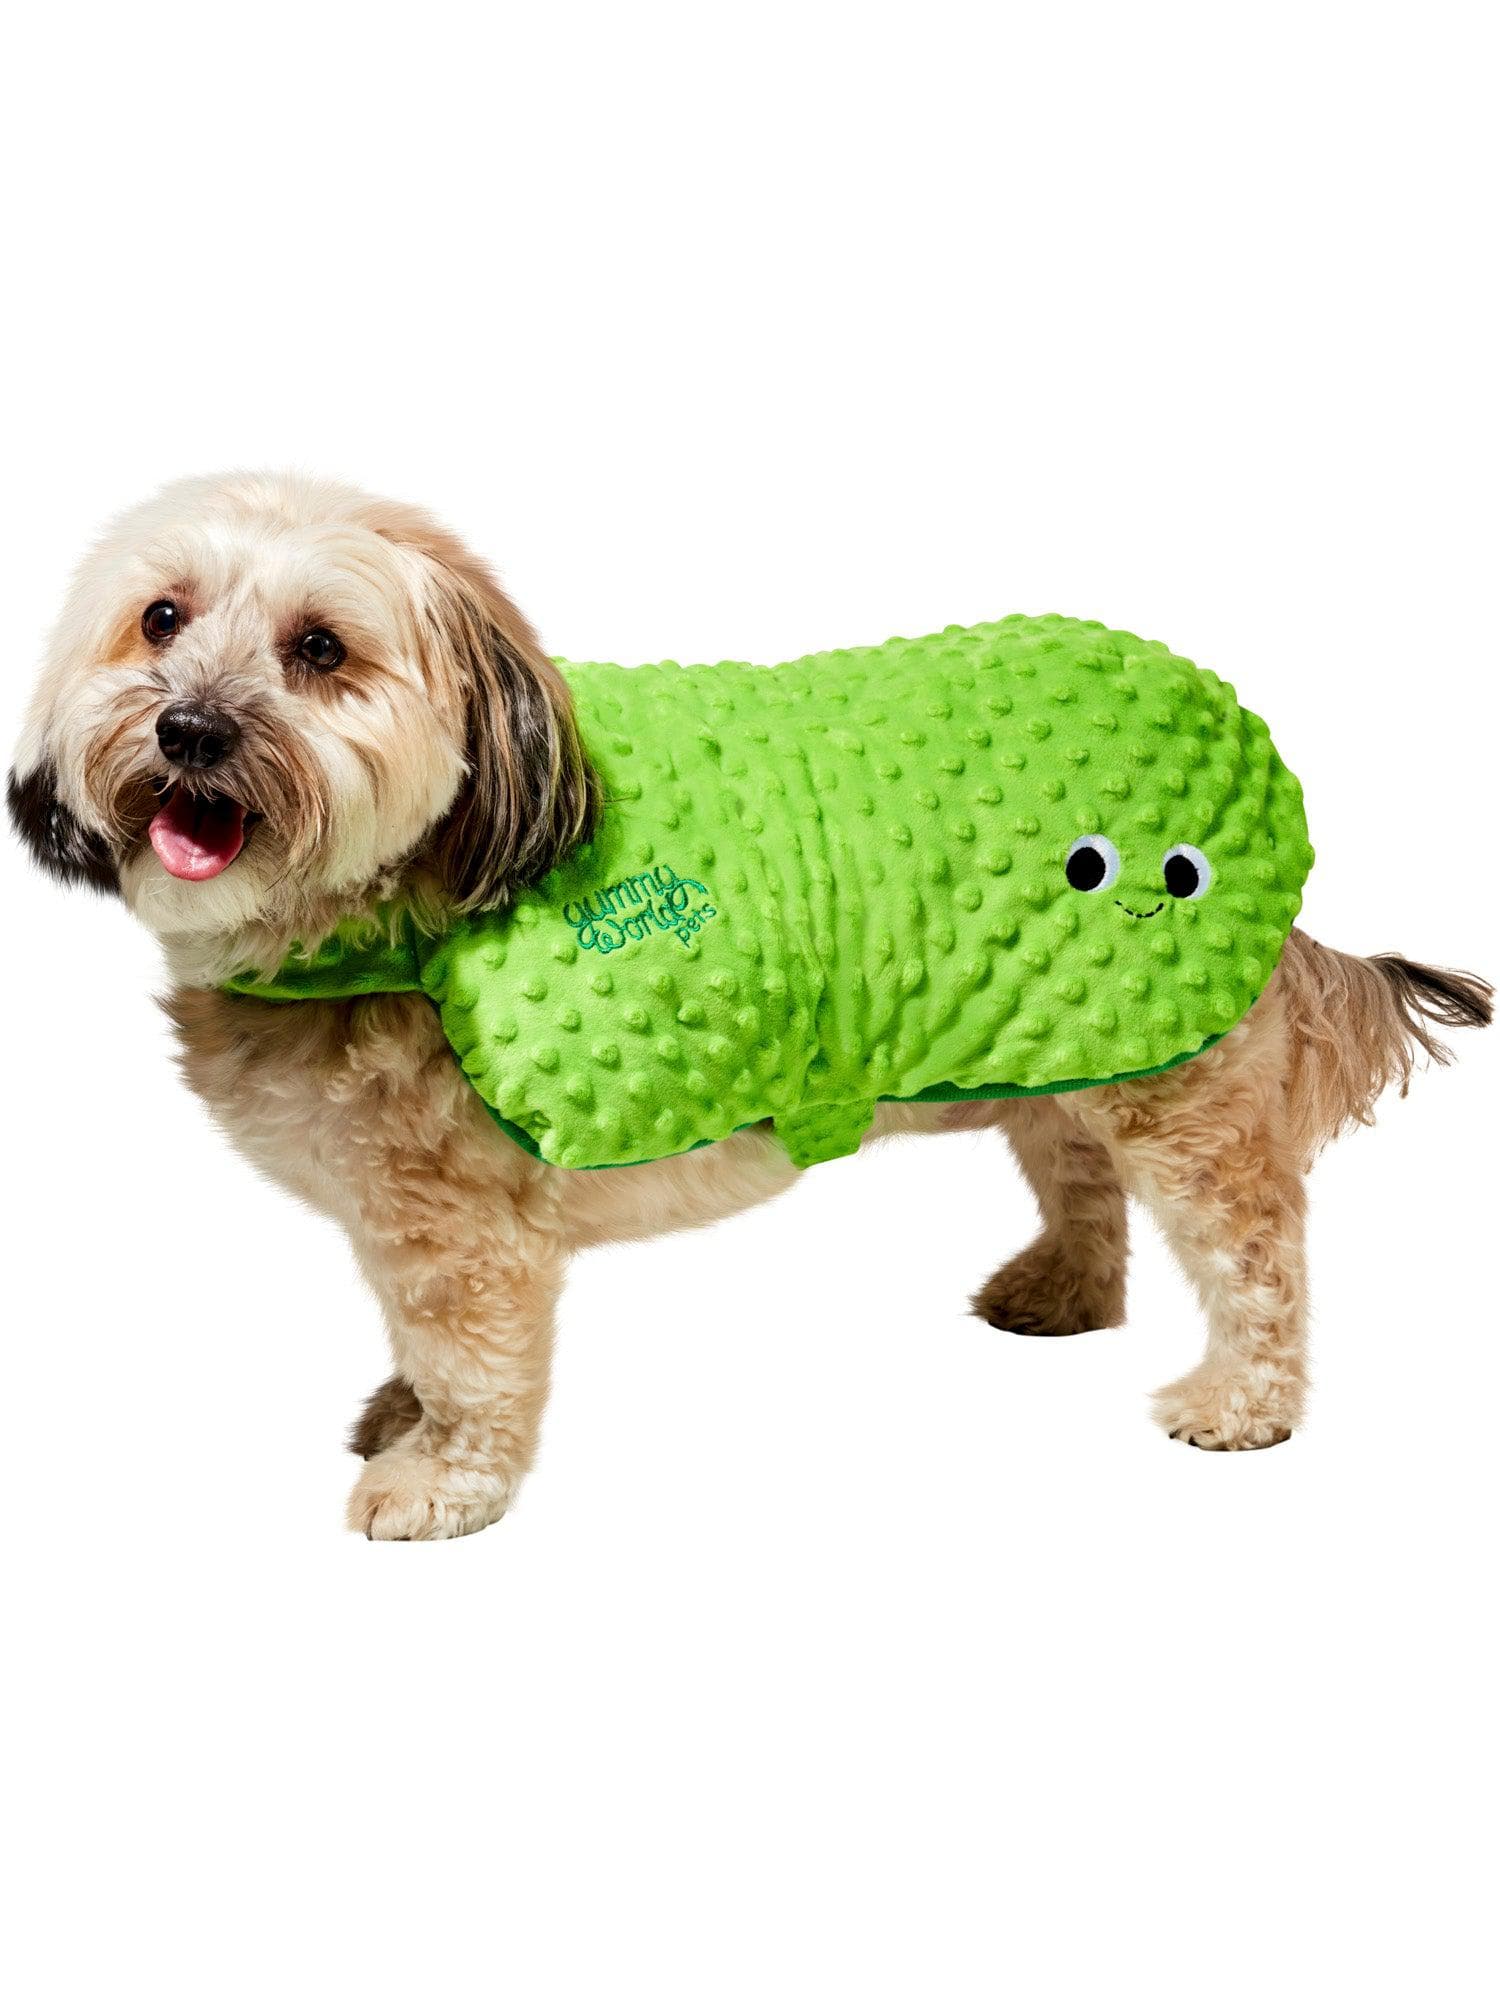 Yummy World Big Dill Pickle Pet Costume by Kidrobot - costumes.com